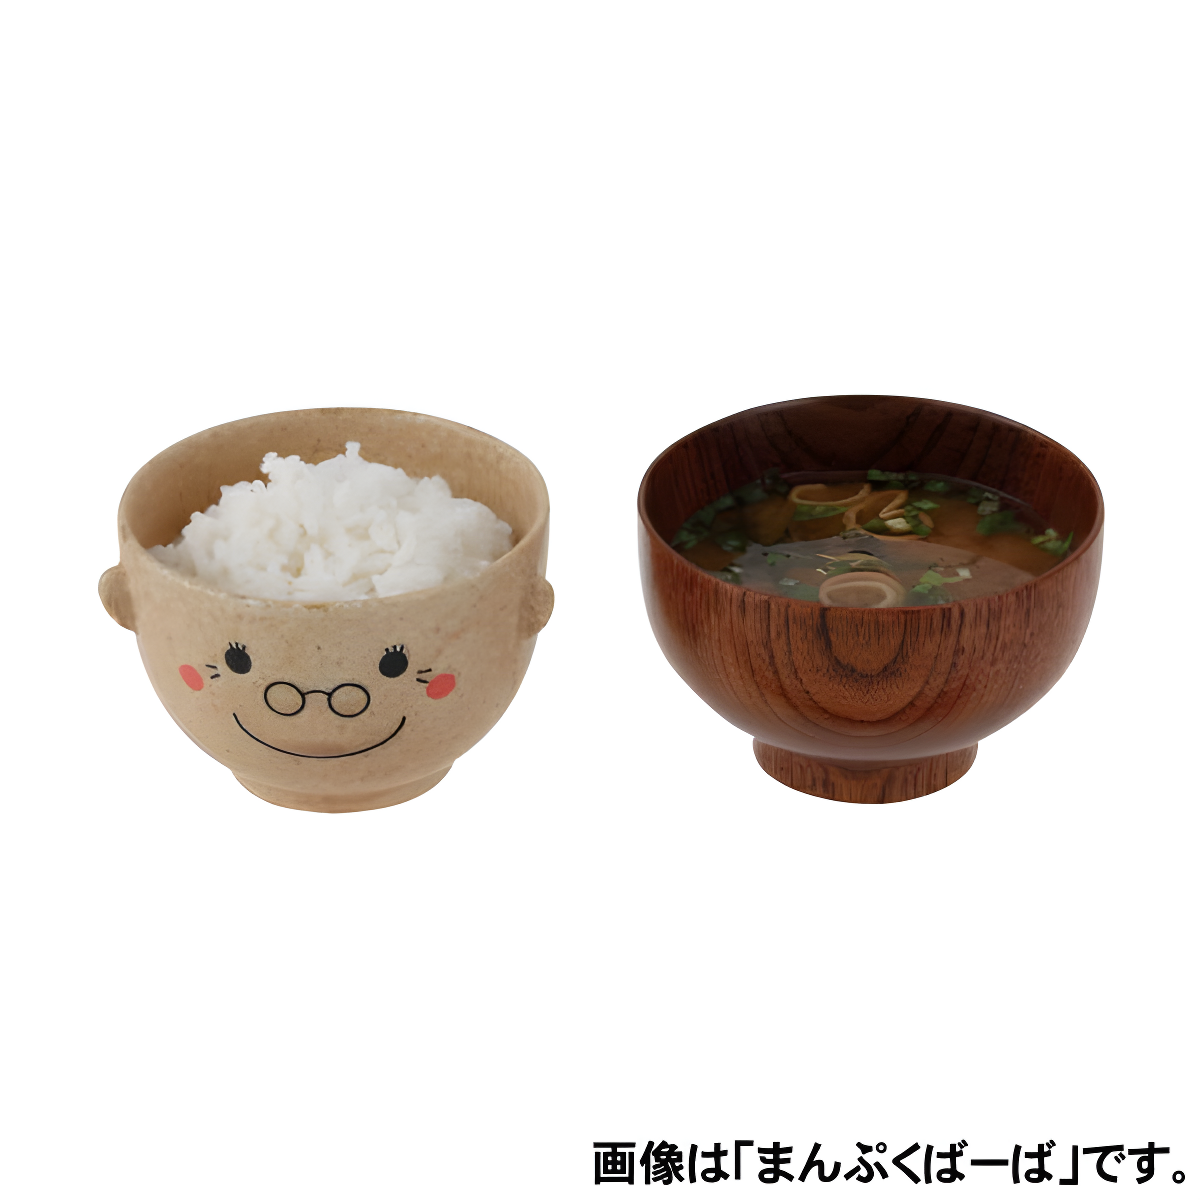 Bowl Set - Grandparents Large (Japan Edition)